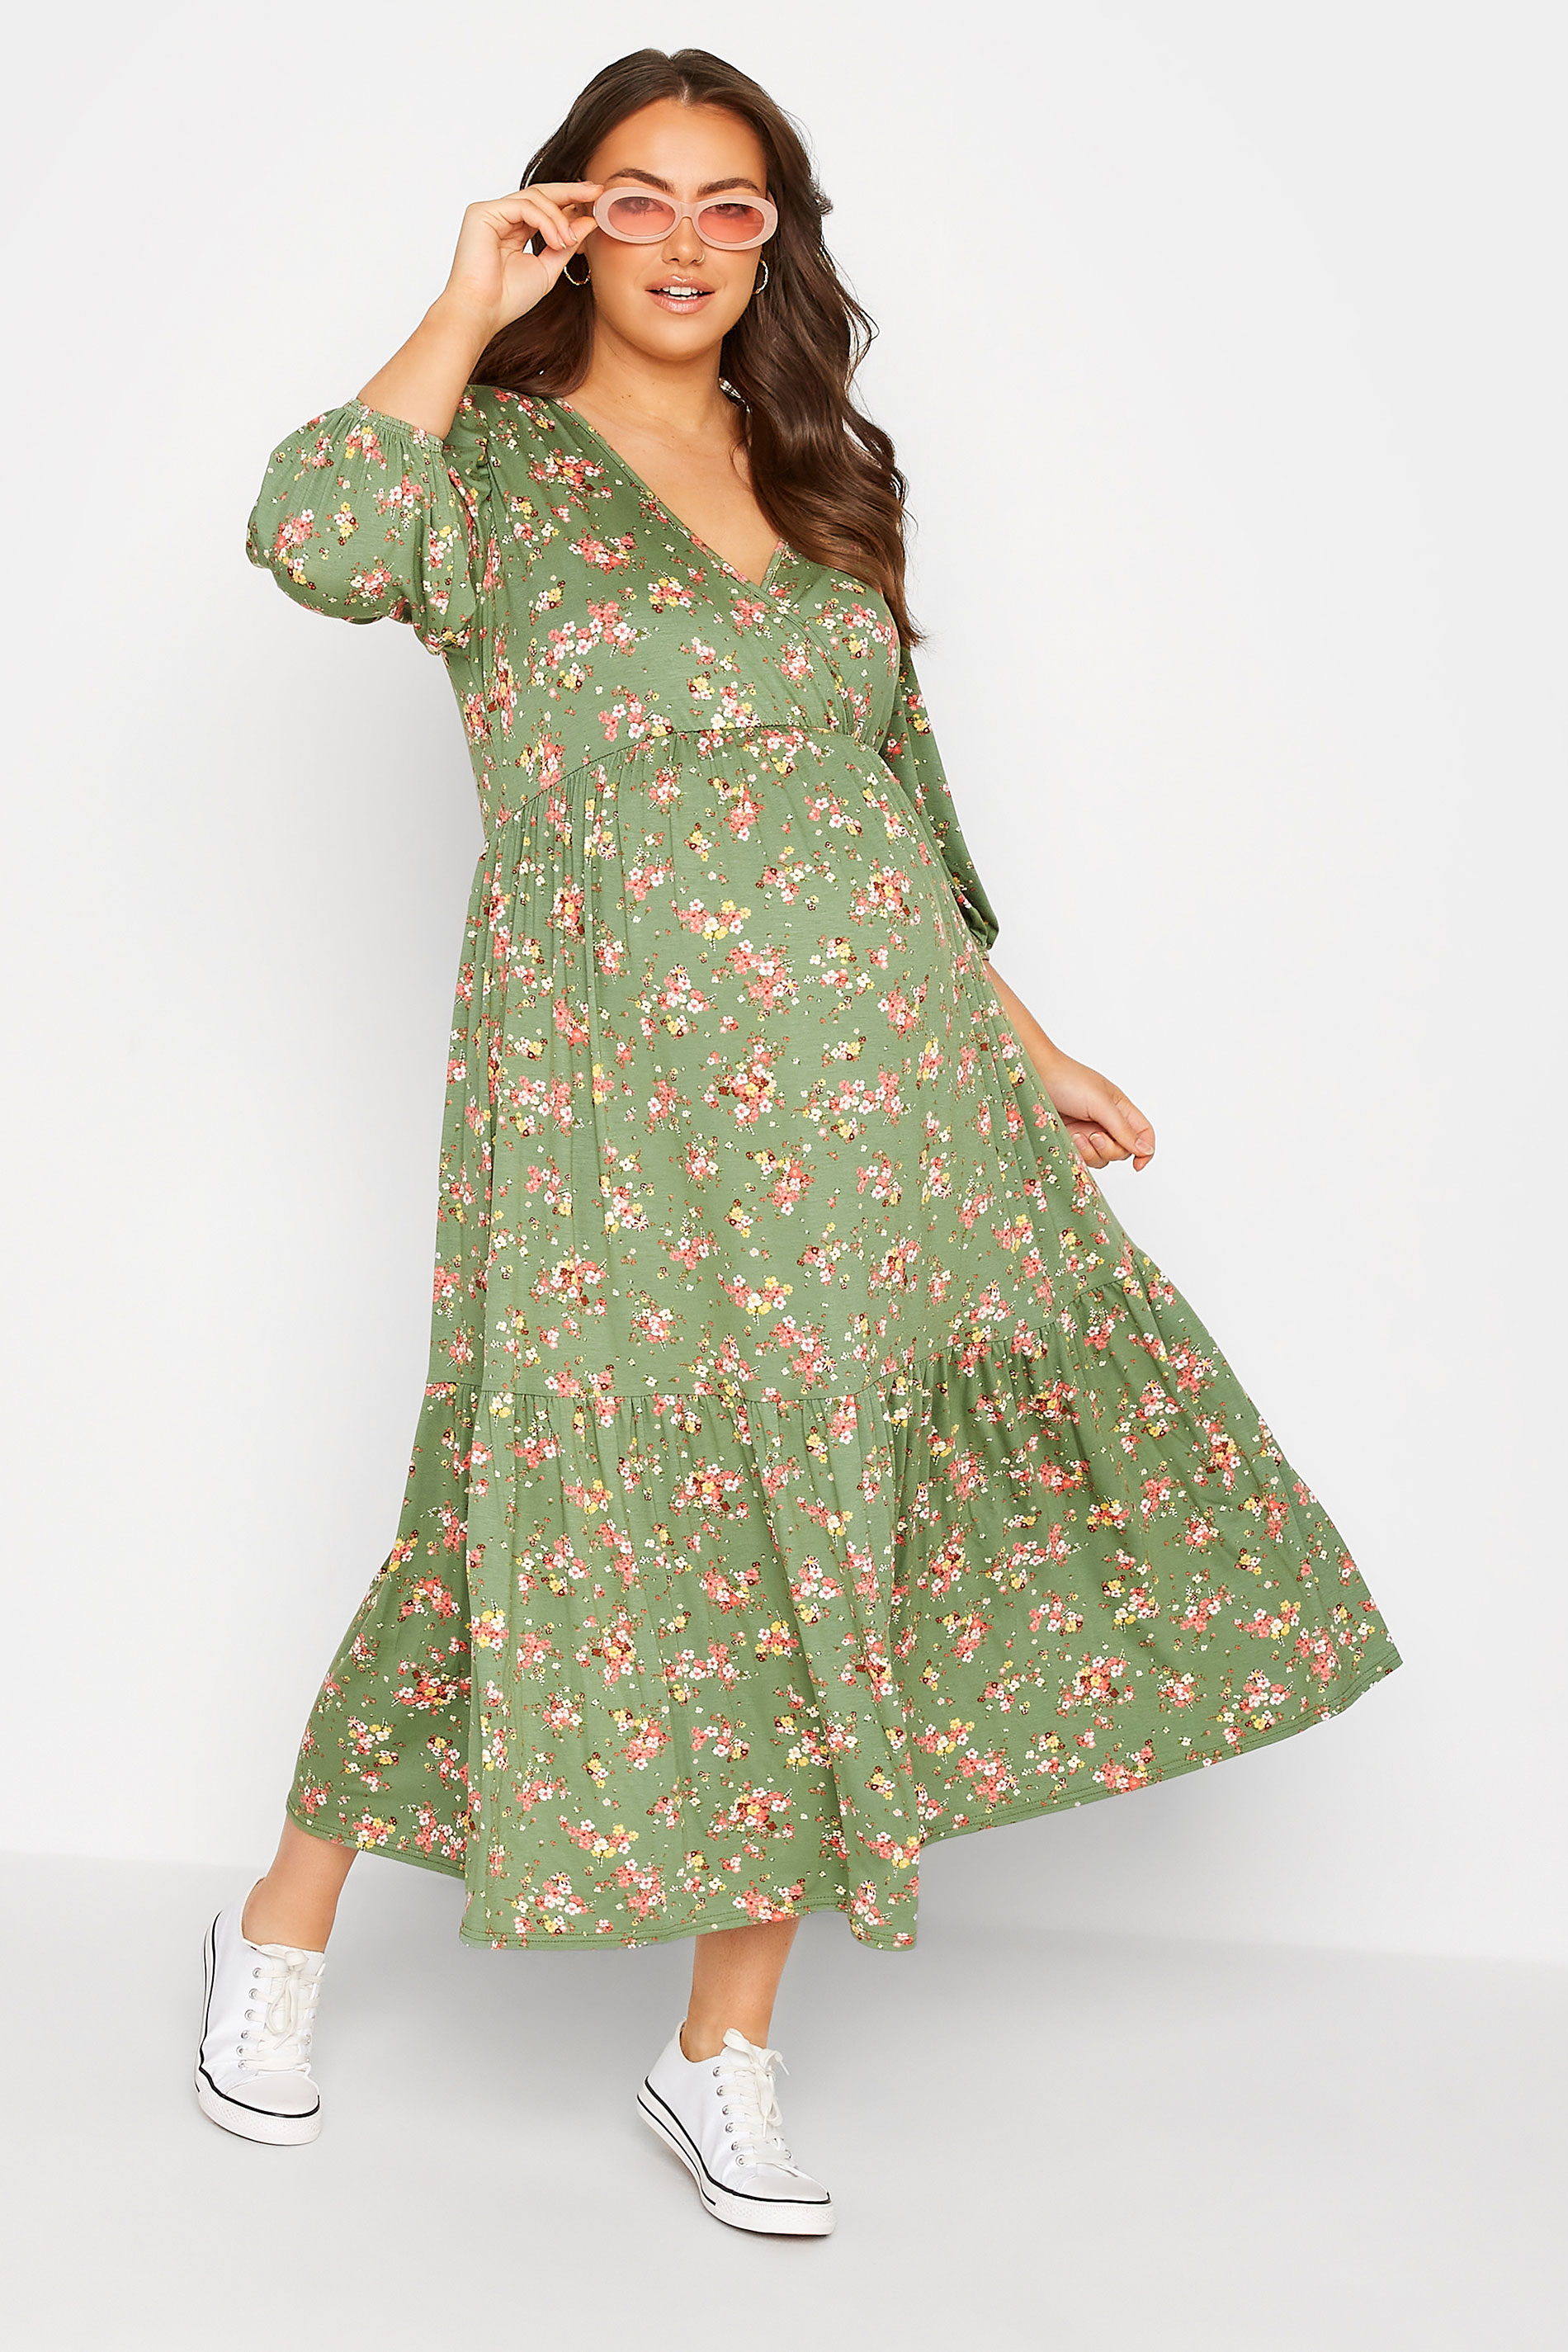 Grande taille  Vêtements de Grossesse Grande taille  Robe de grossesse | BUMP IT UP MATERNITY Curve Green Floral Print Tiered Wrap Dress - NM68651